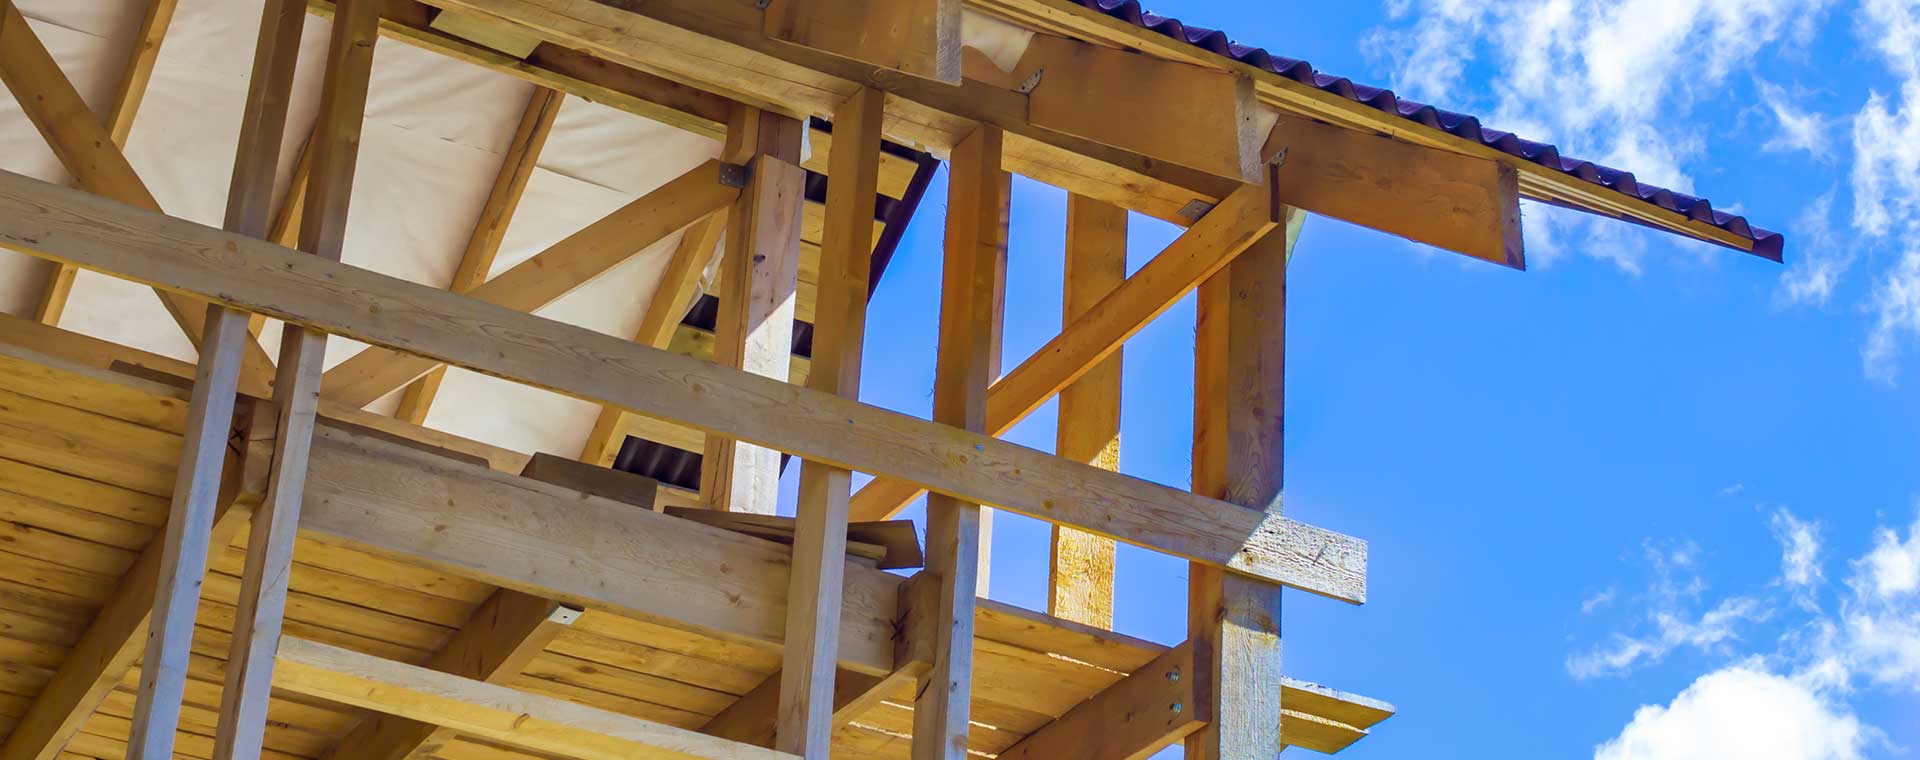 Quality Timber Frame Homes slider image